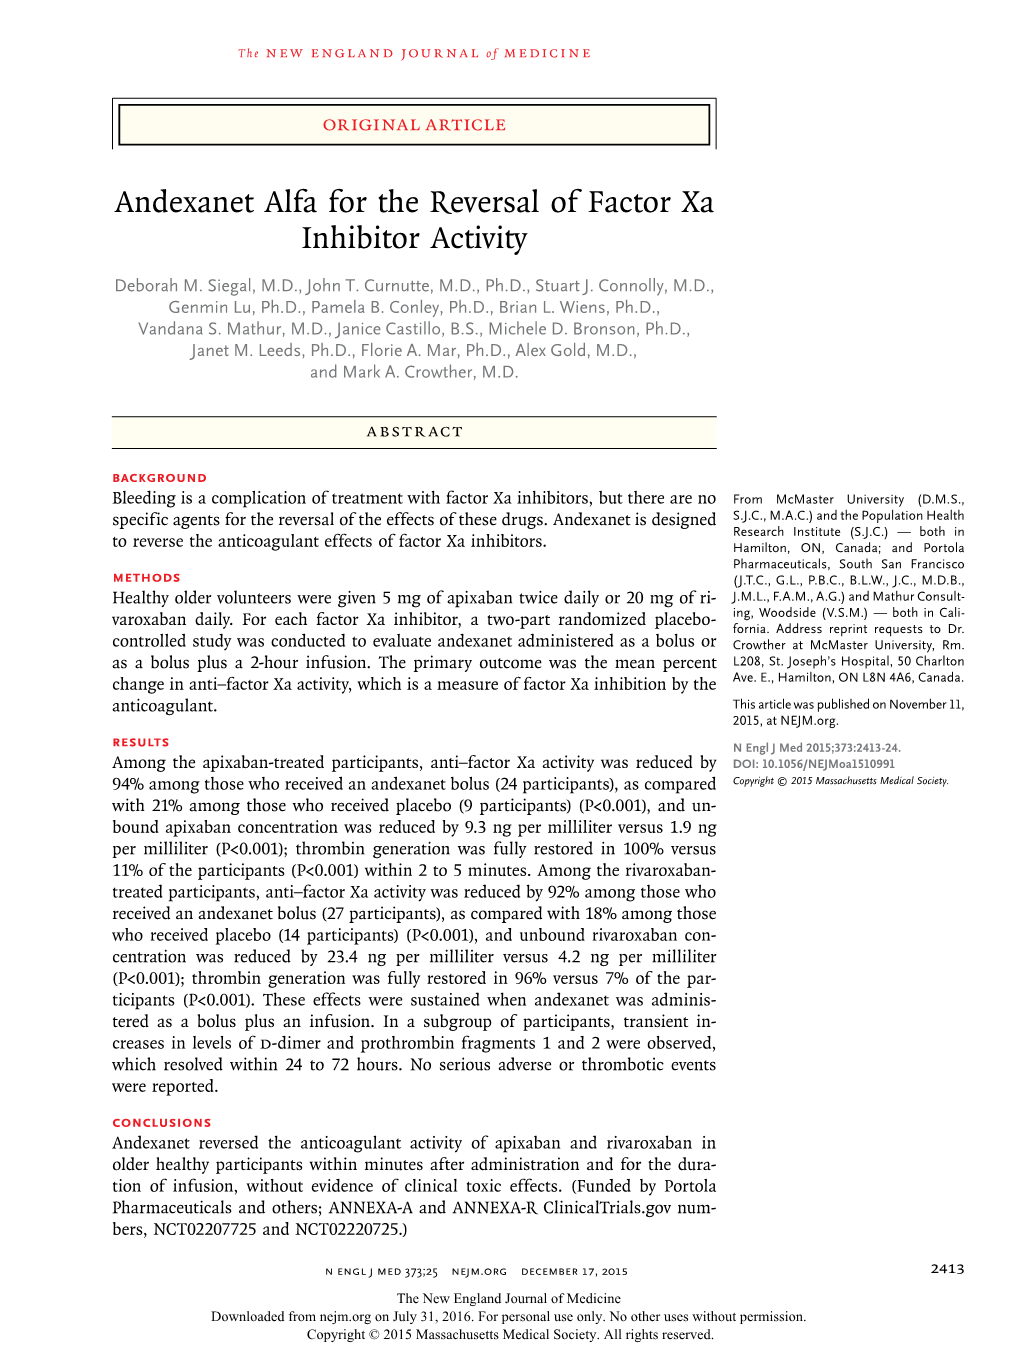 Andexanet Alfa for the Reversal of Factor Xa Inhibitor Activity